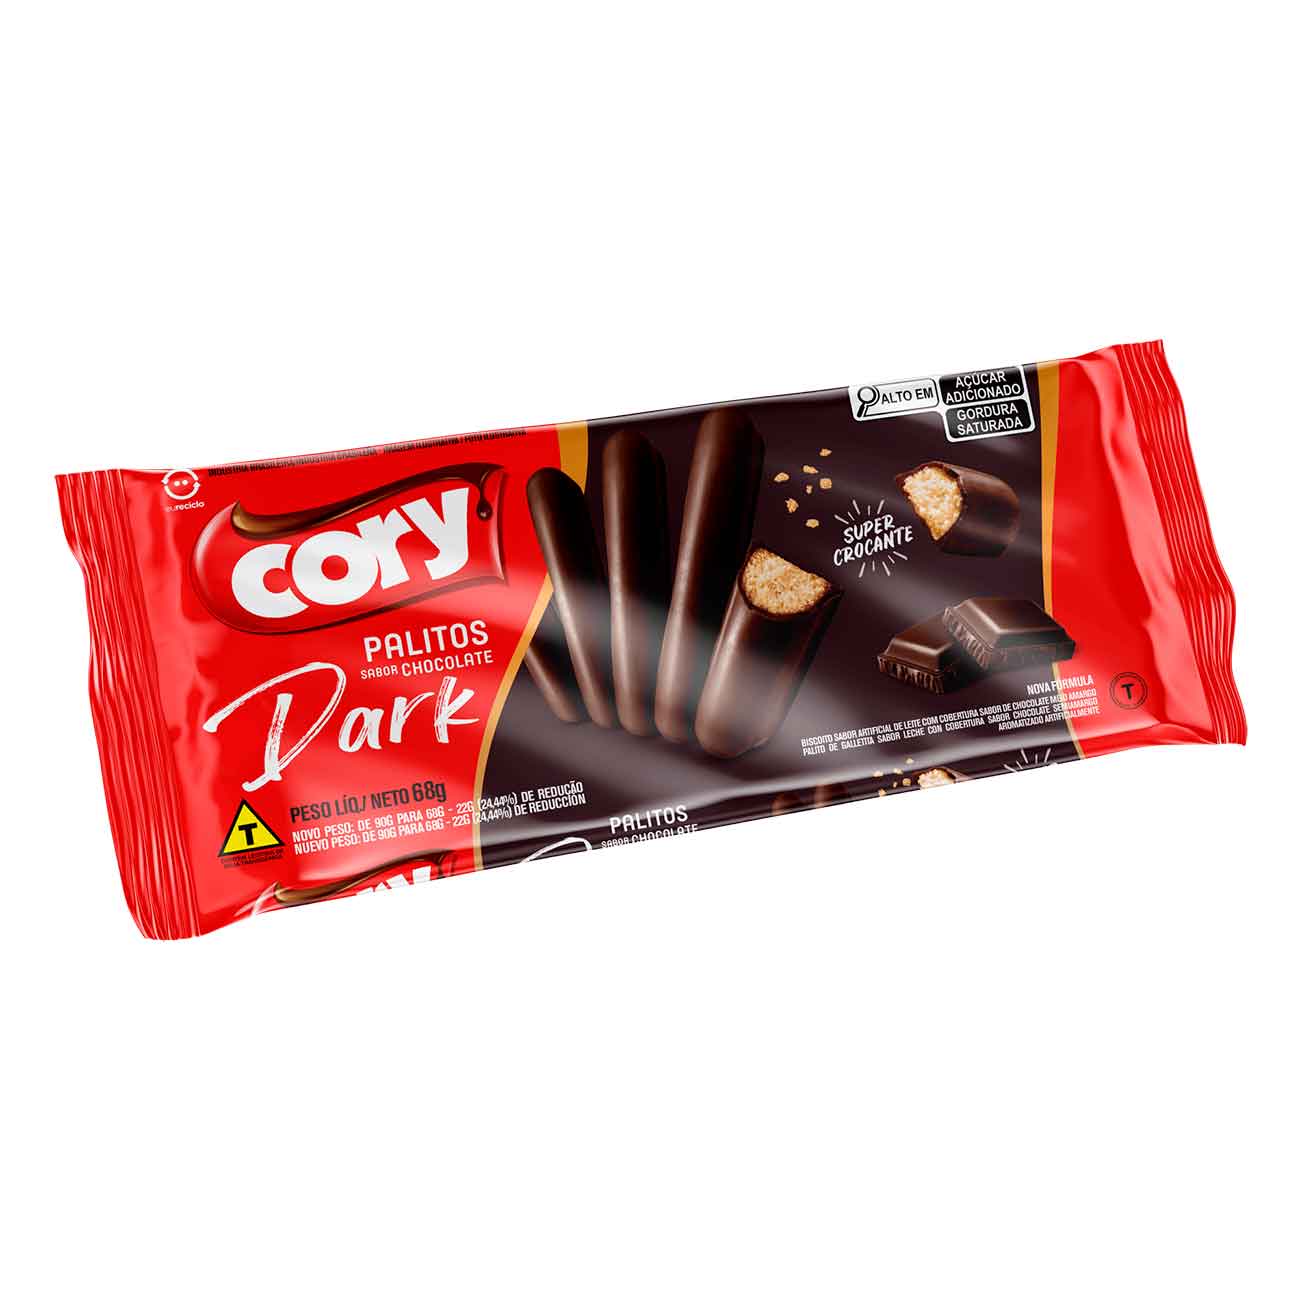 Palitos Cory Chocolate Meio Amargo 68g